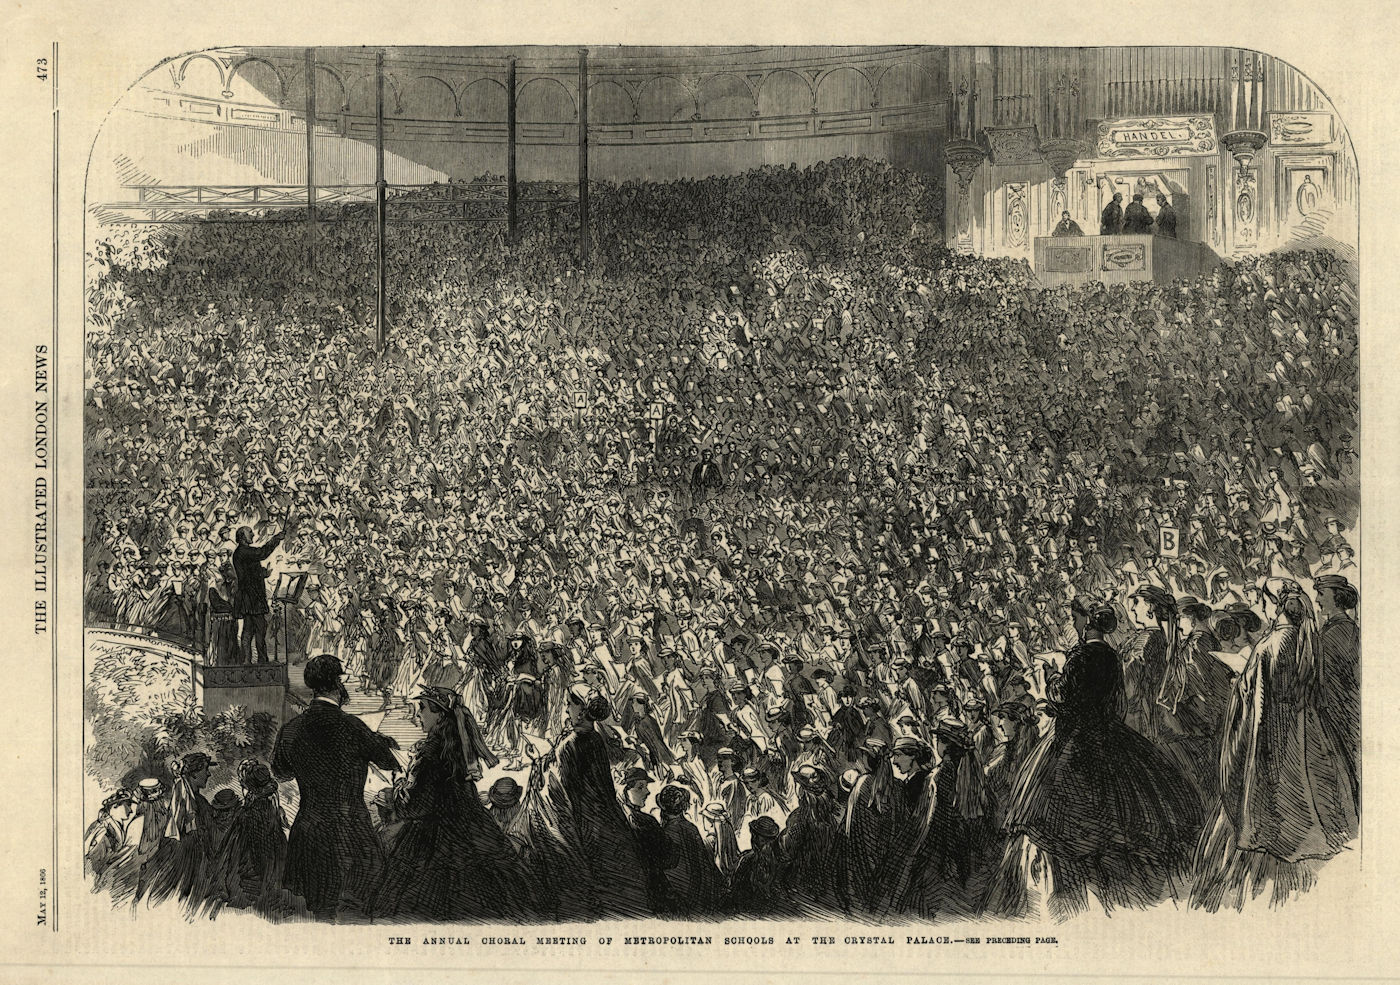 Choral meeting of metropolitan schools at the Crystal Palace. London 1866